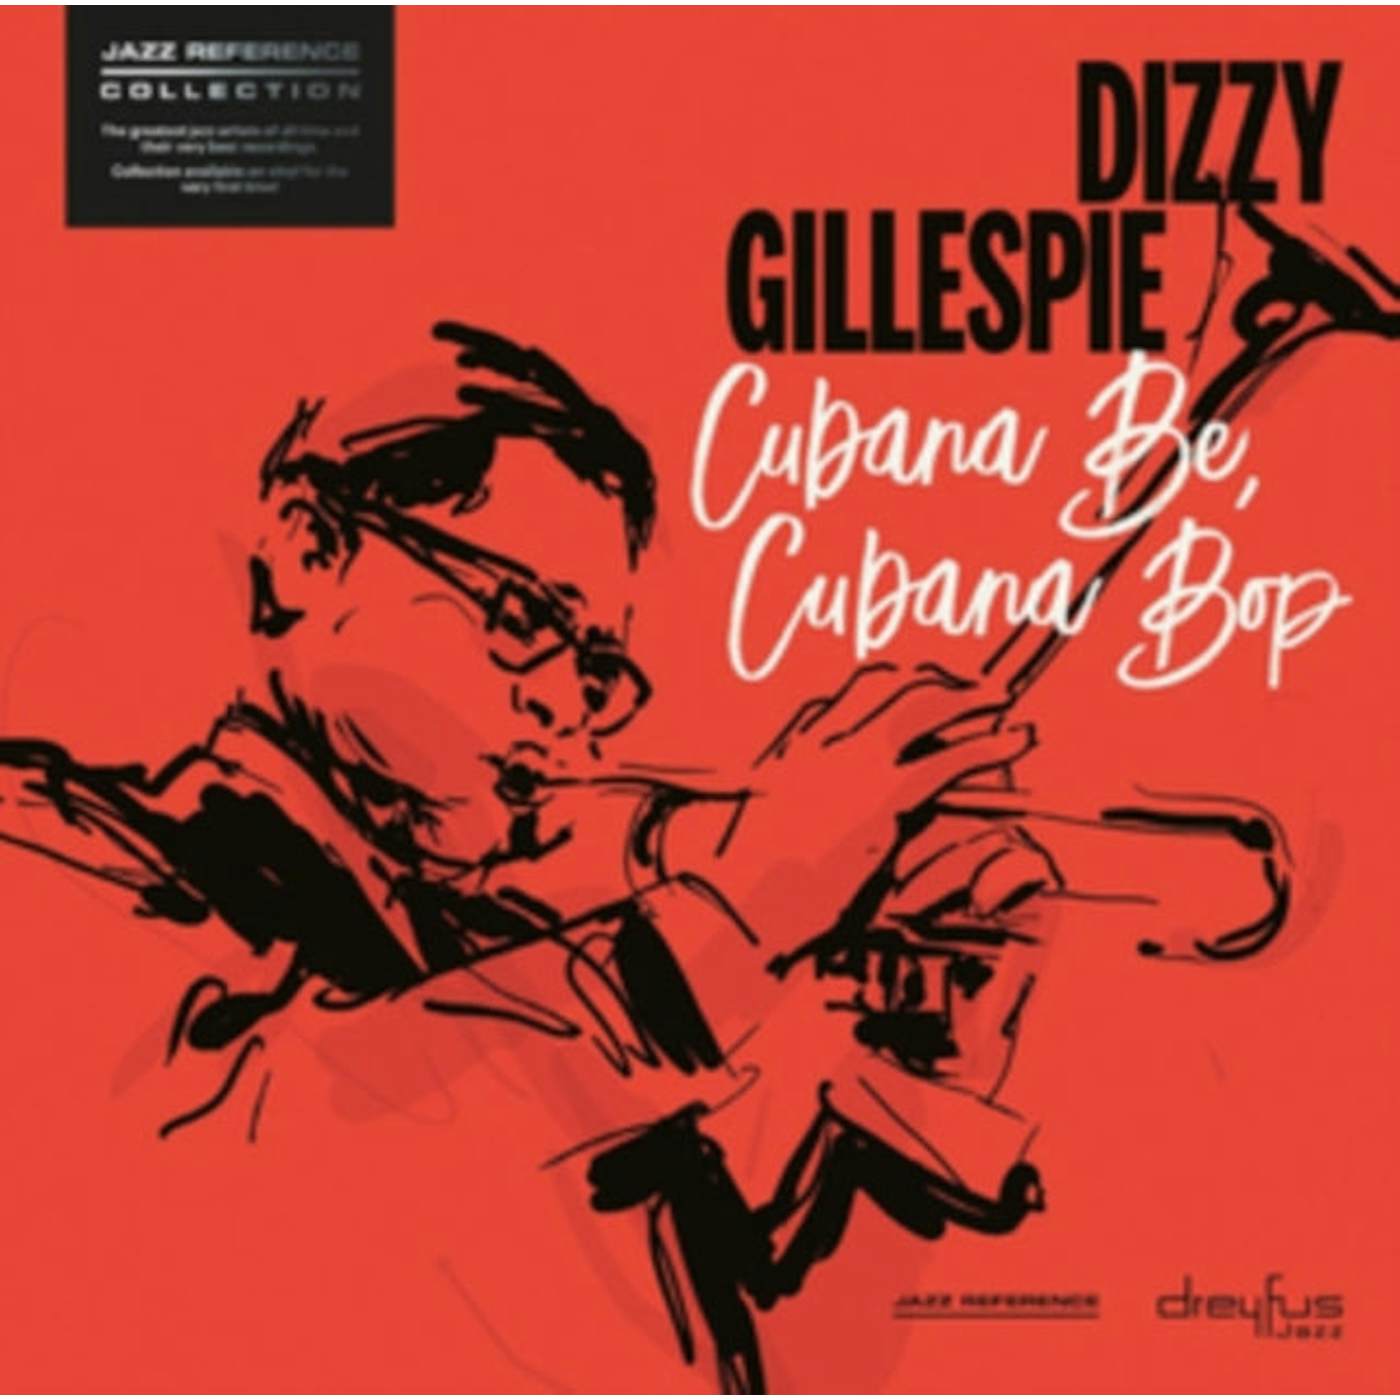 Dizzy Gillespie LP Vinyl Record - Cubana Be. Cubana Bop